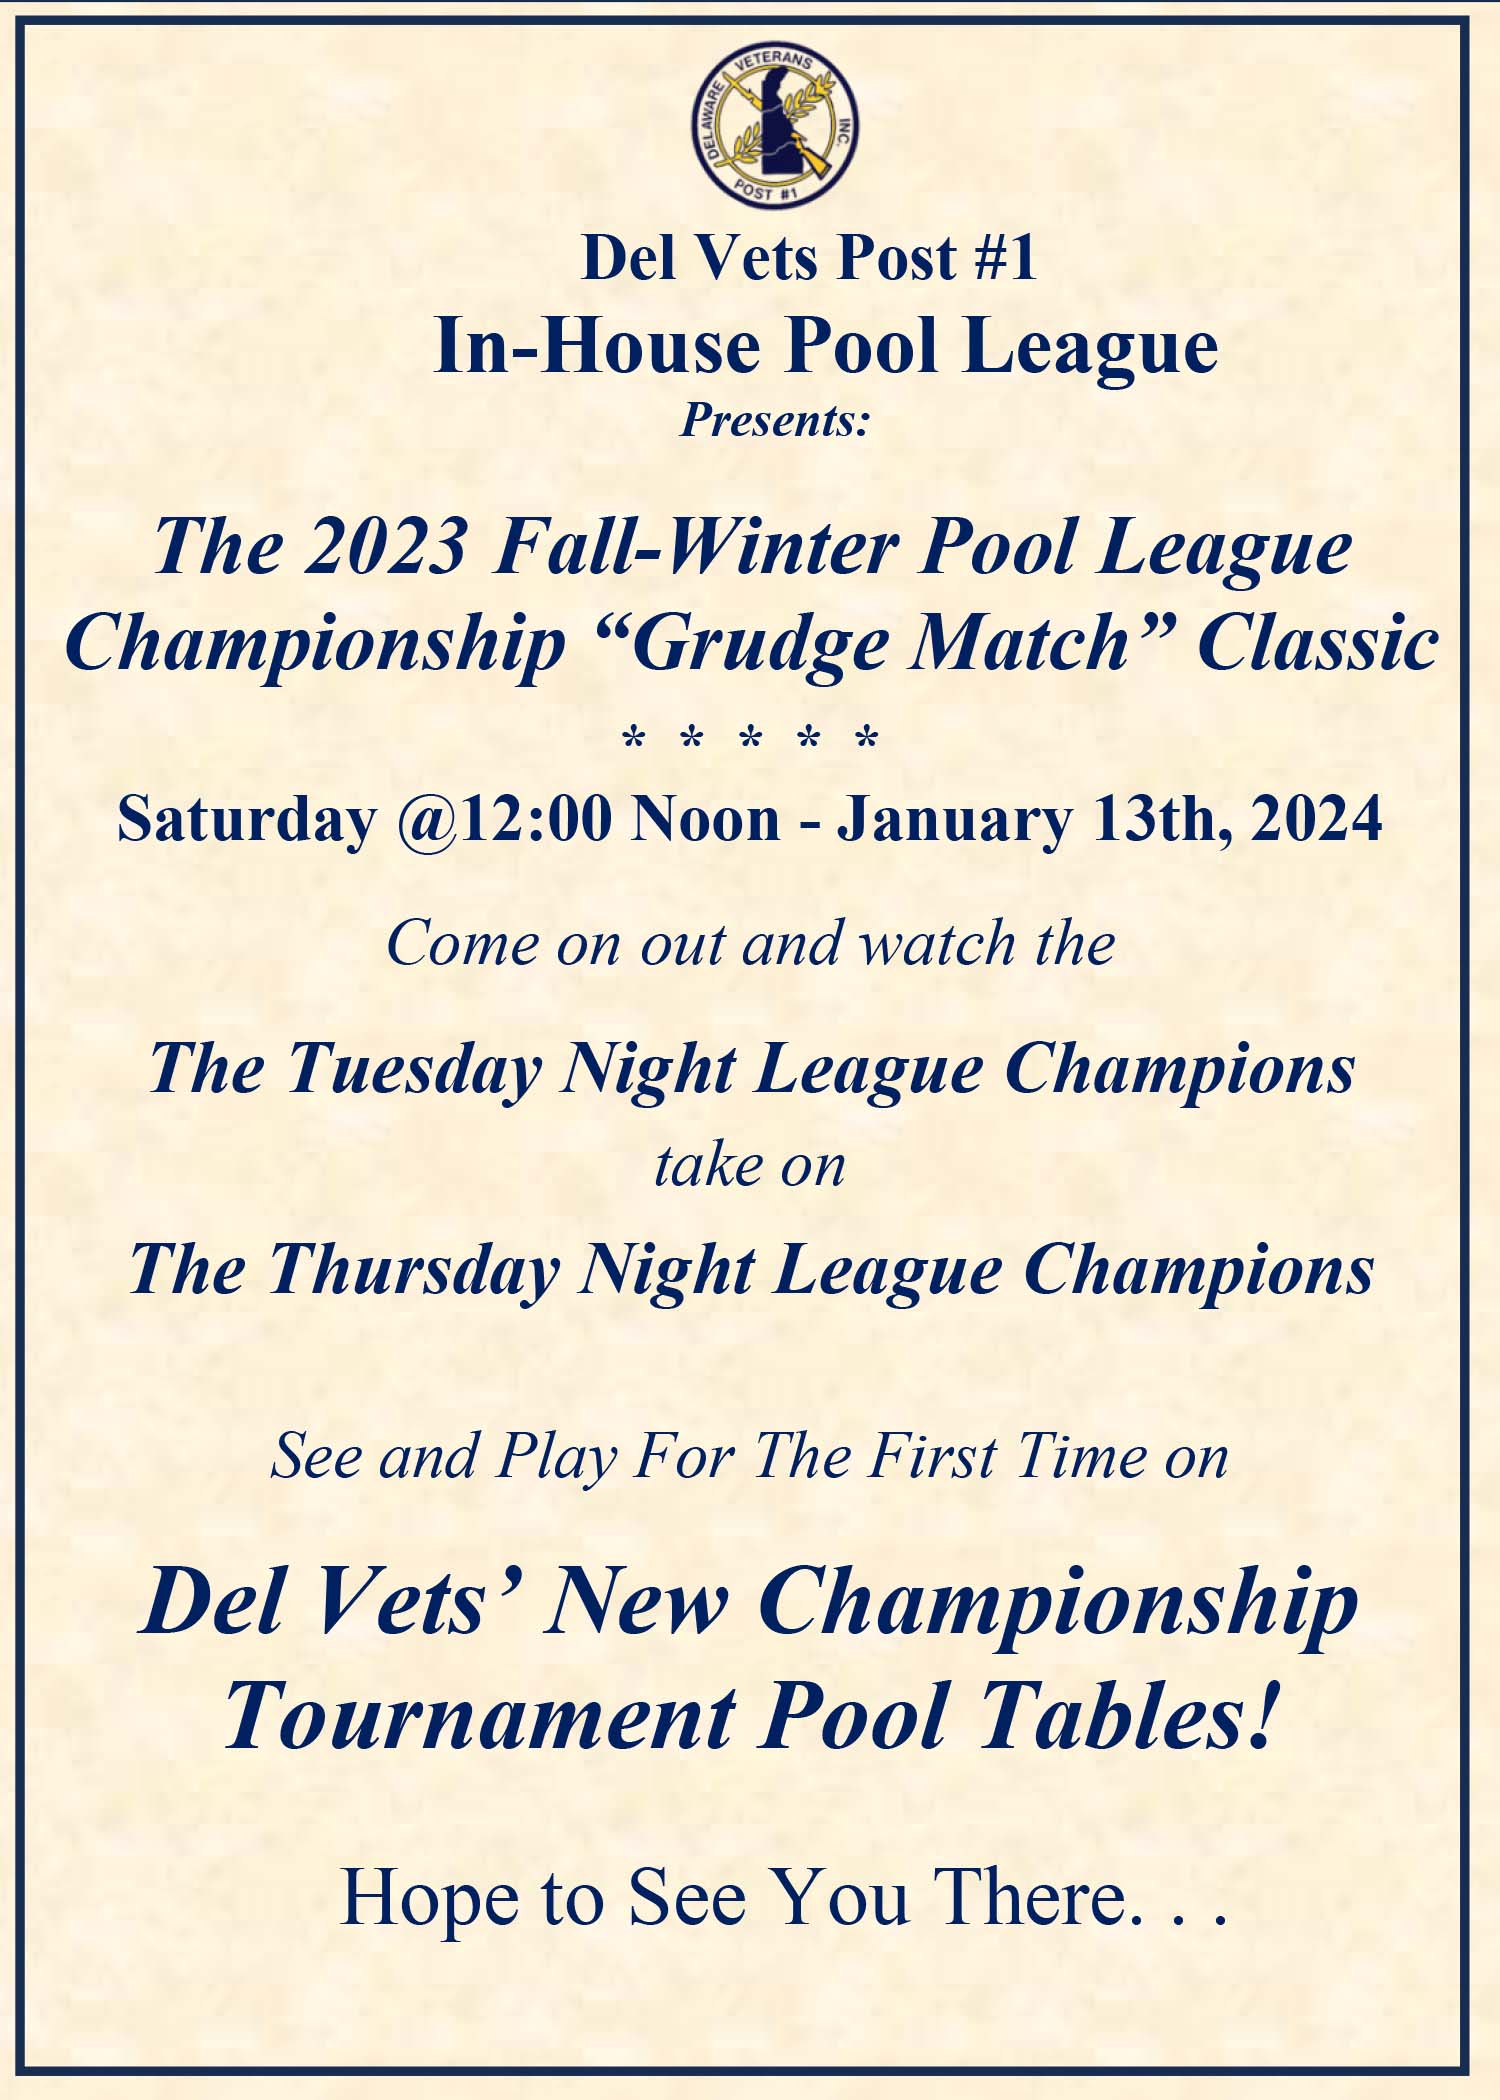 2023 Pool League "Grudge Match" Classic